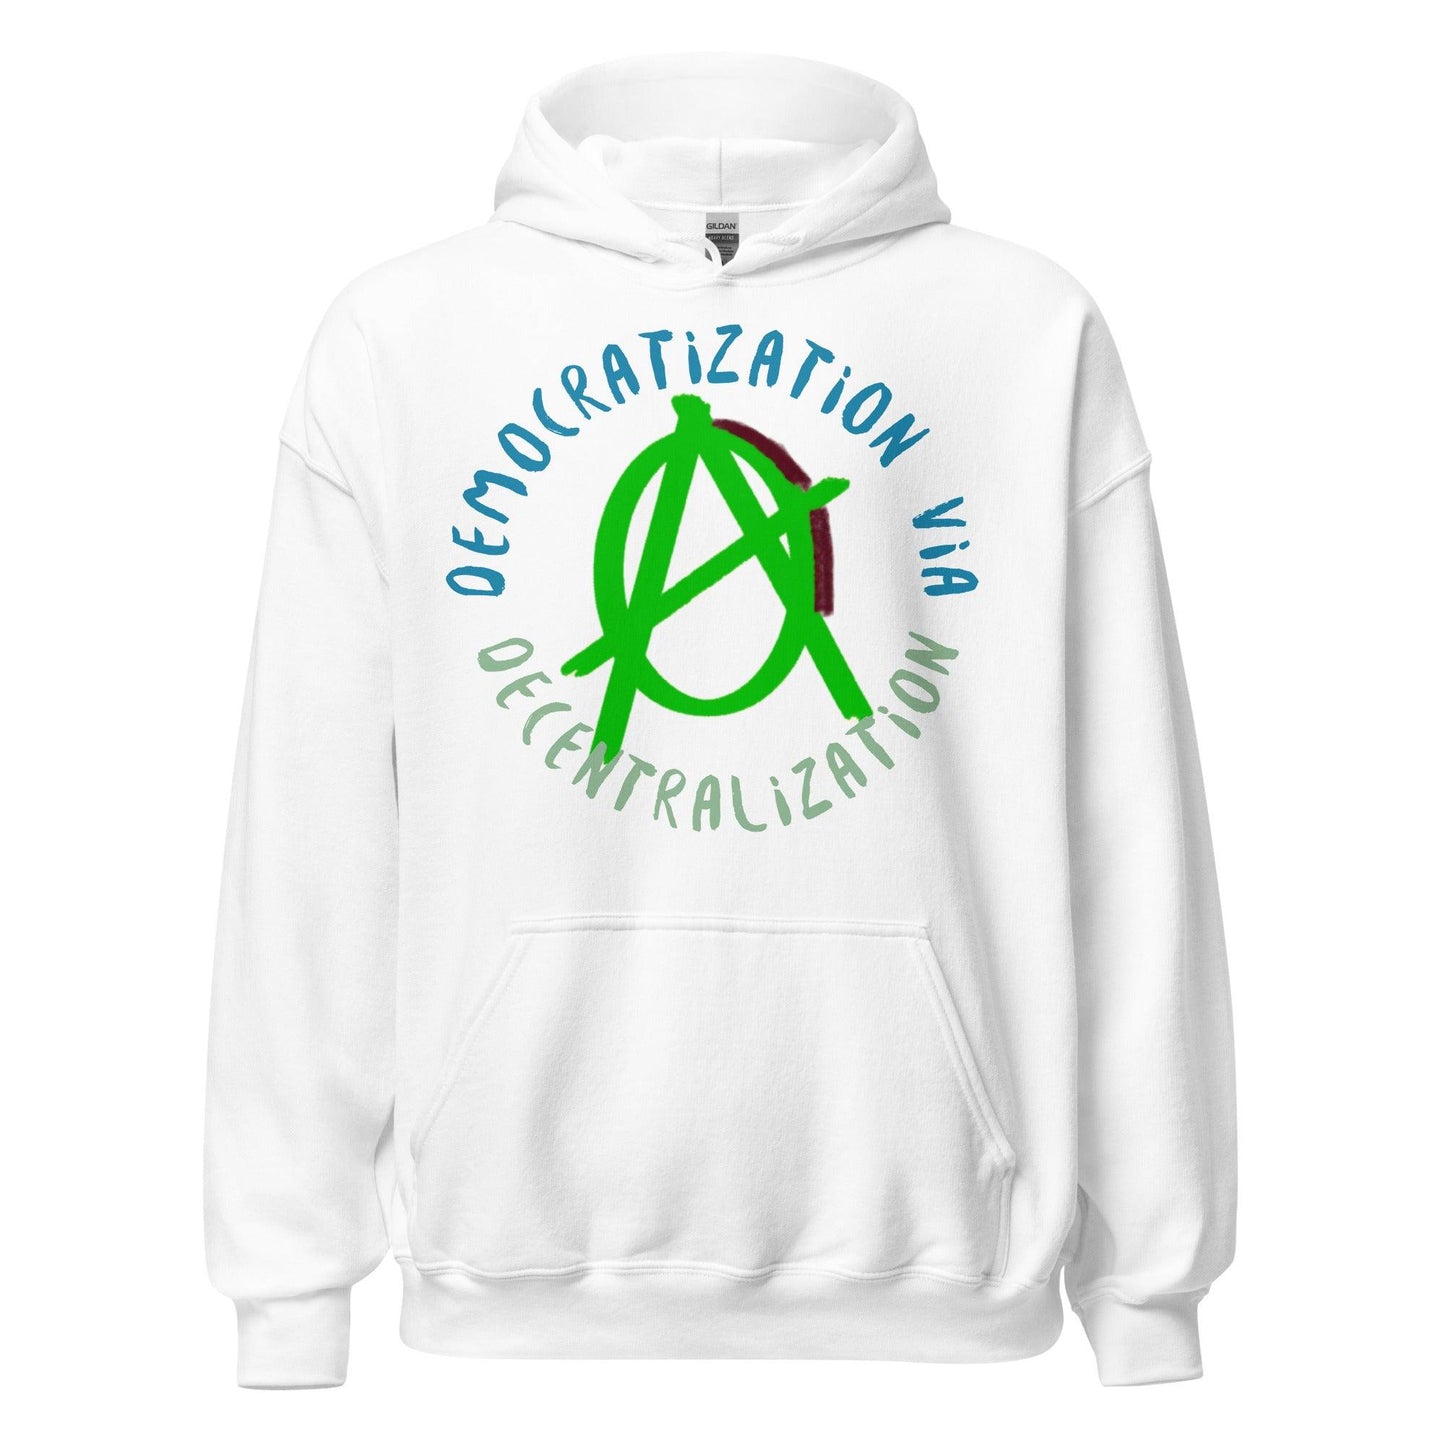 Anarchy Wear Green "Decentralization" Hoodie - AnarchyWear